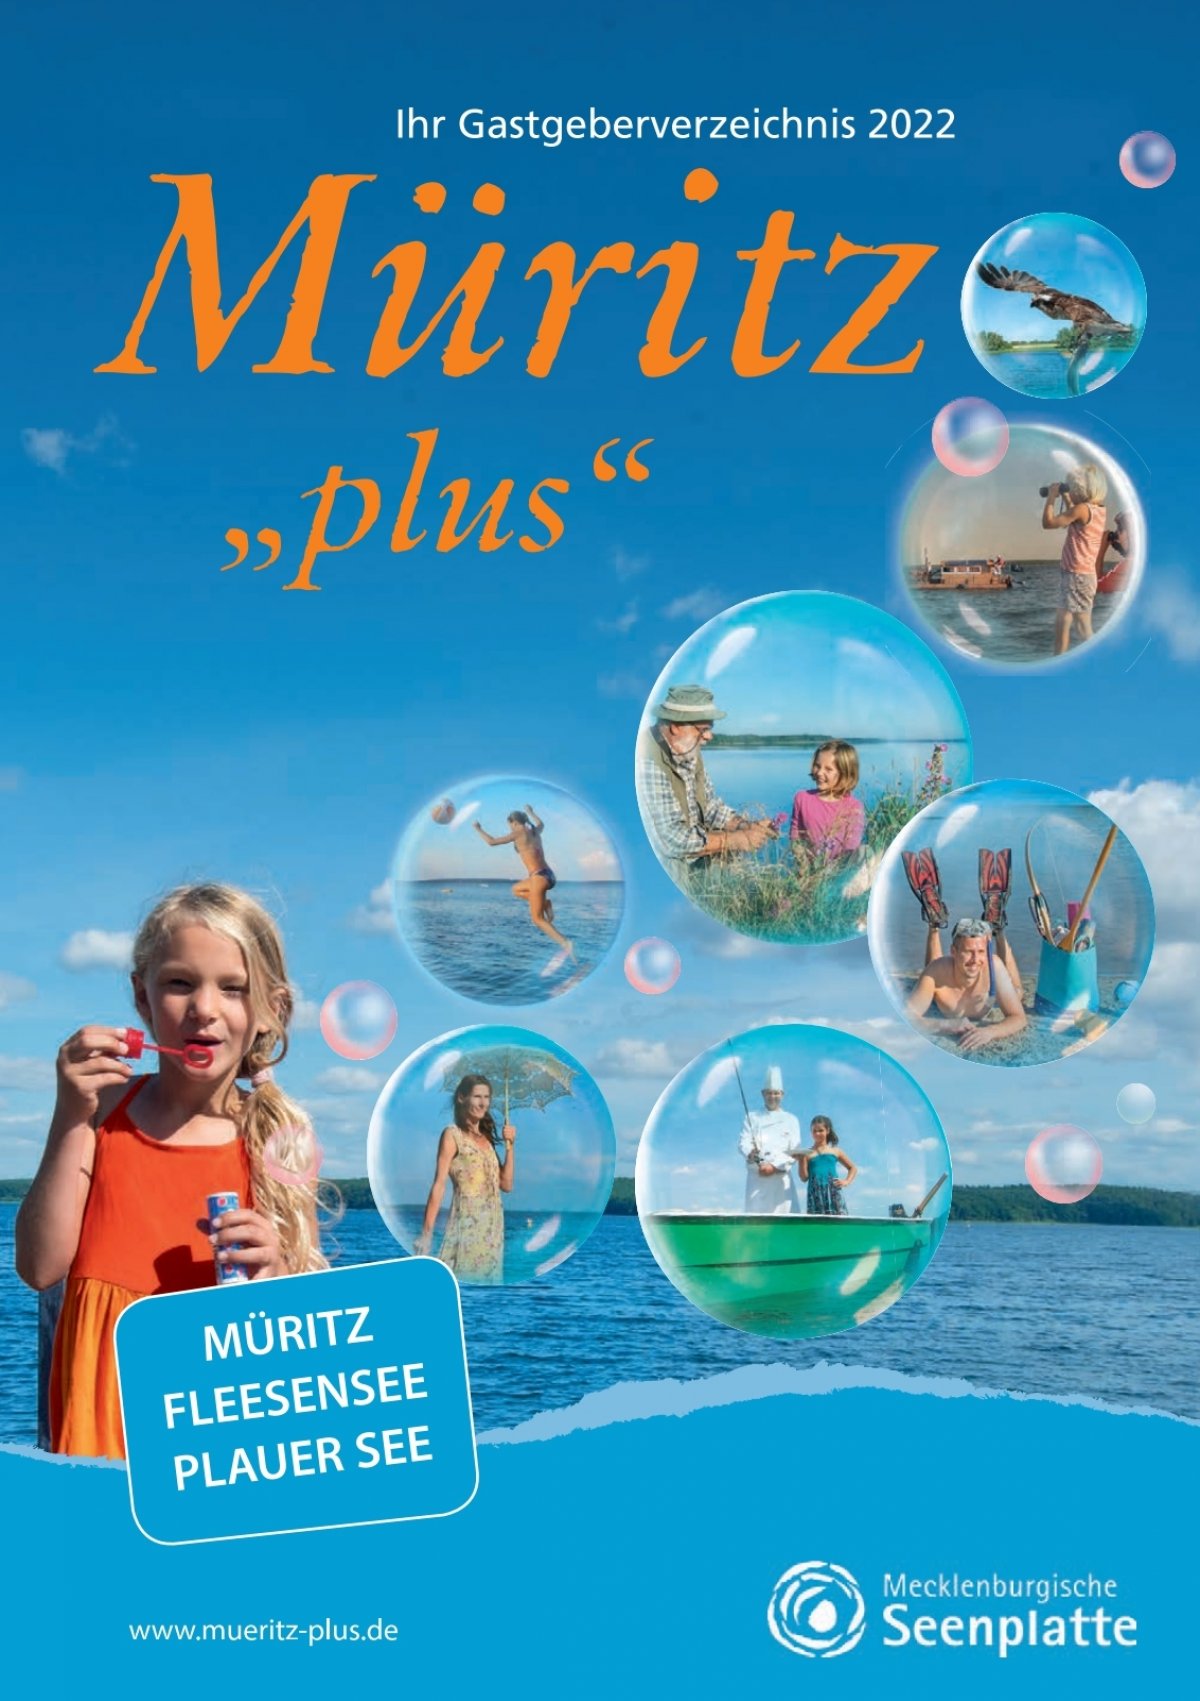 Müritz "plus" 2022